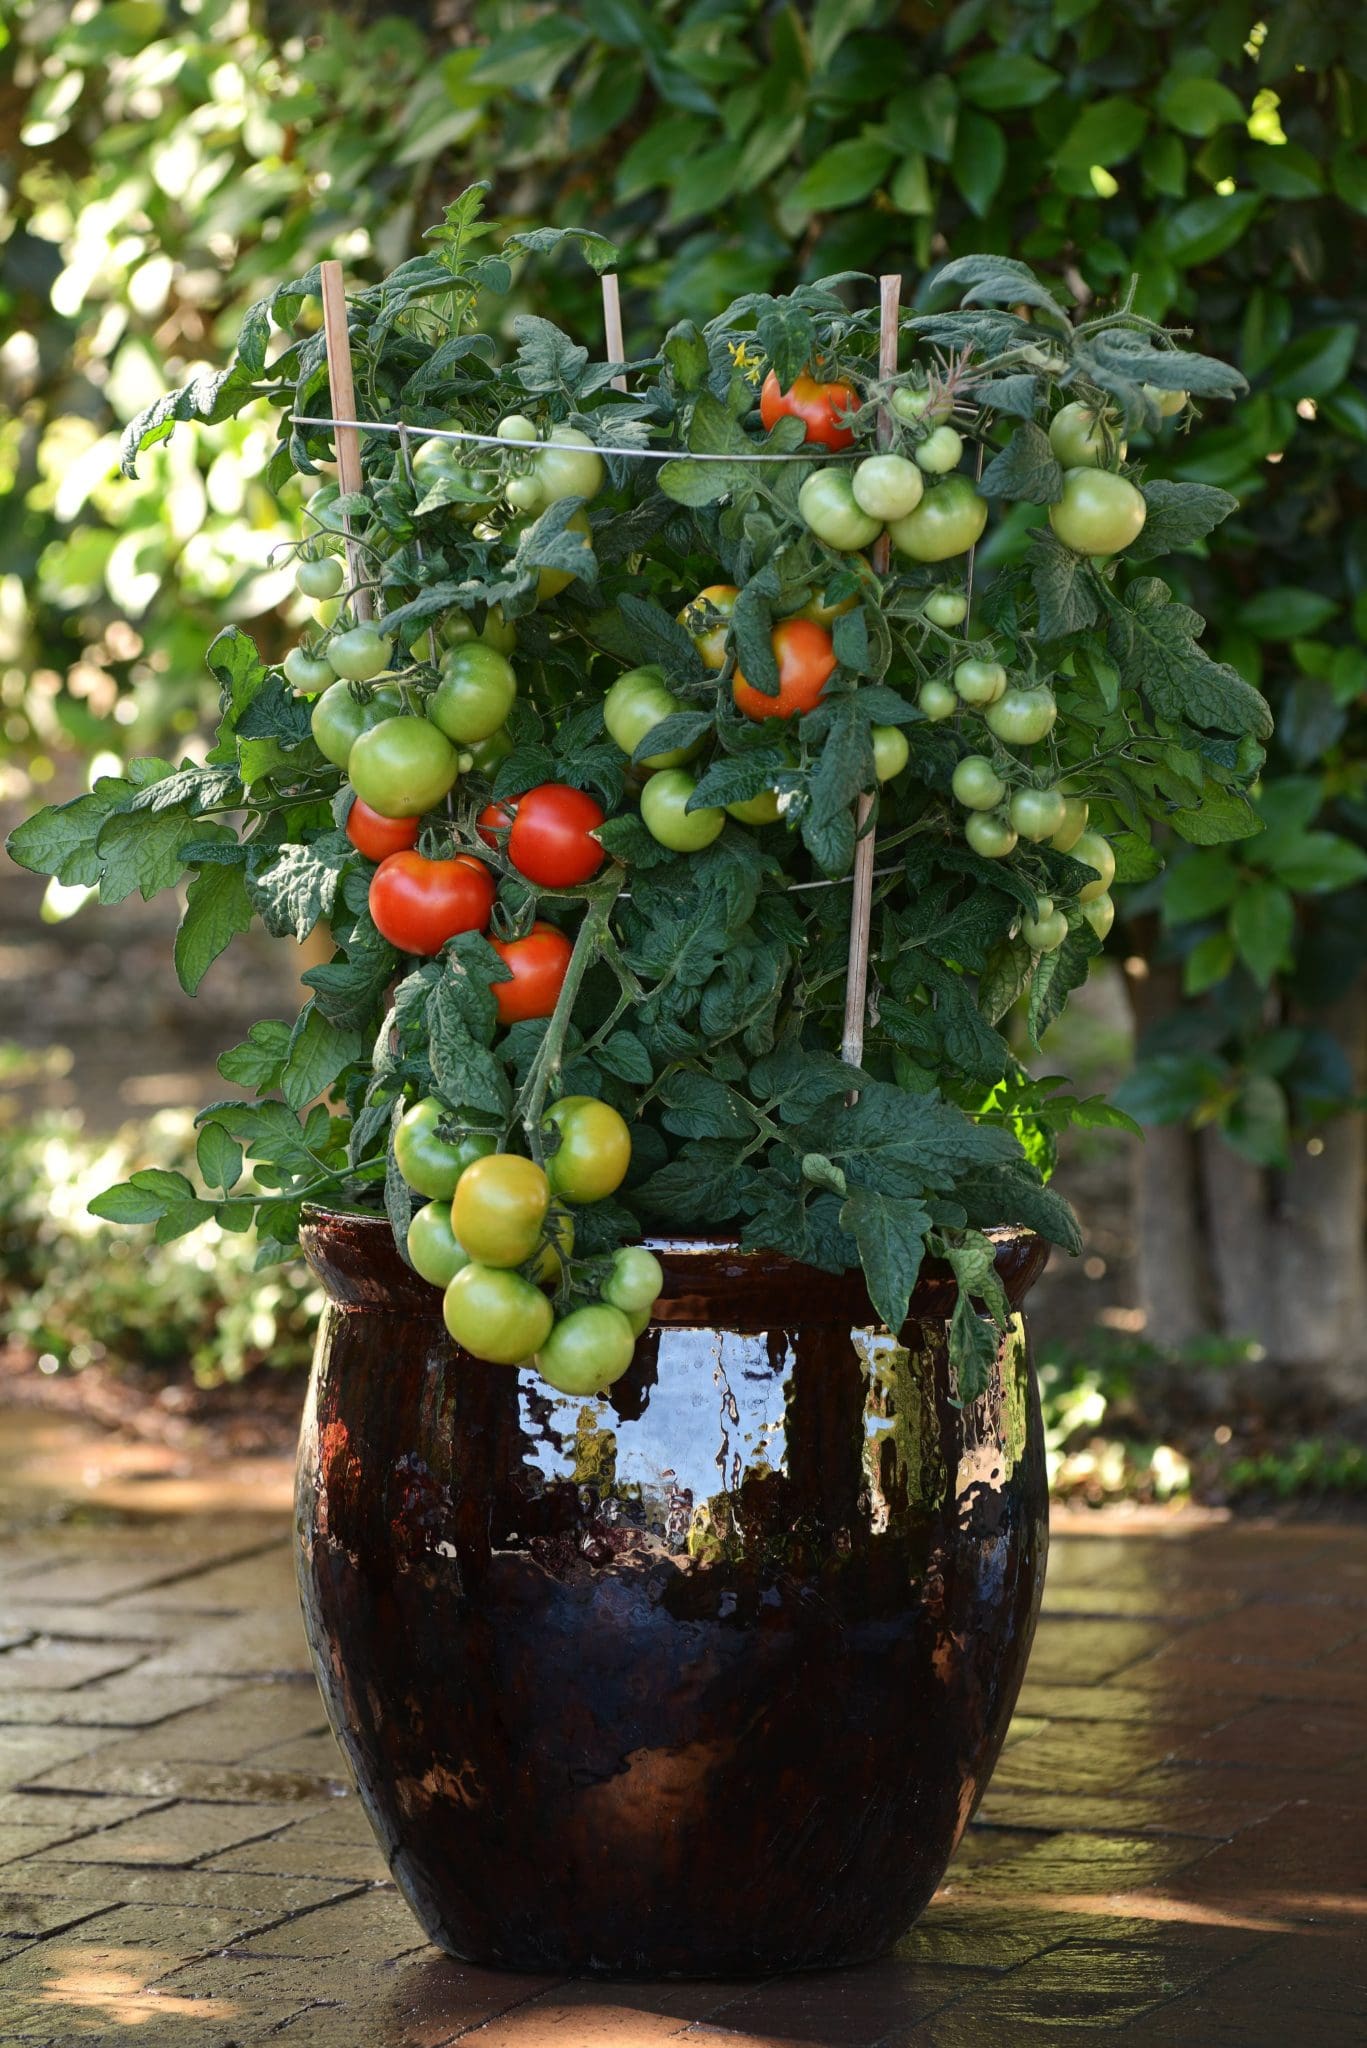 https://www.peacetreefarm.com/plants/solanum-lycopersicum-little-sicily-tomato/tomato_little_sicily_container_17651ballphoto-min/